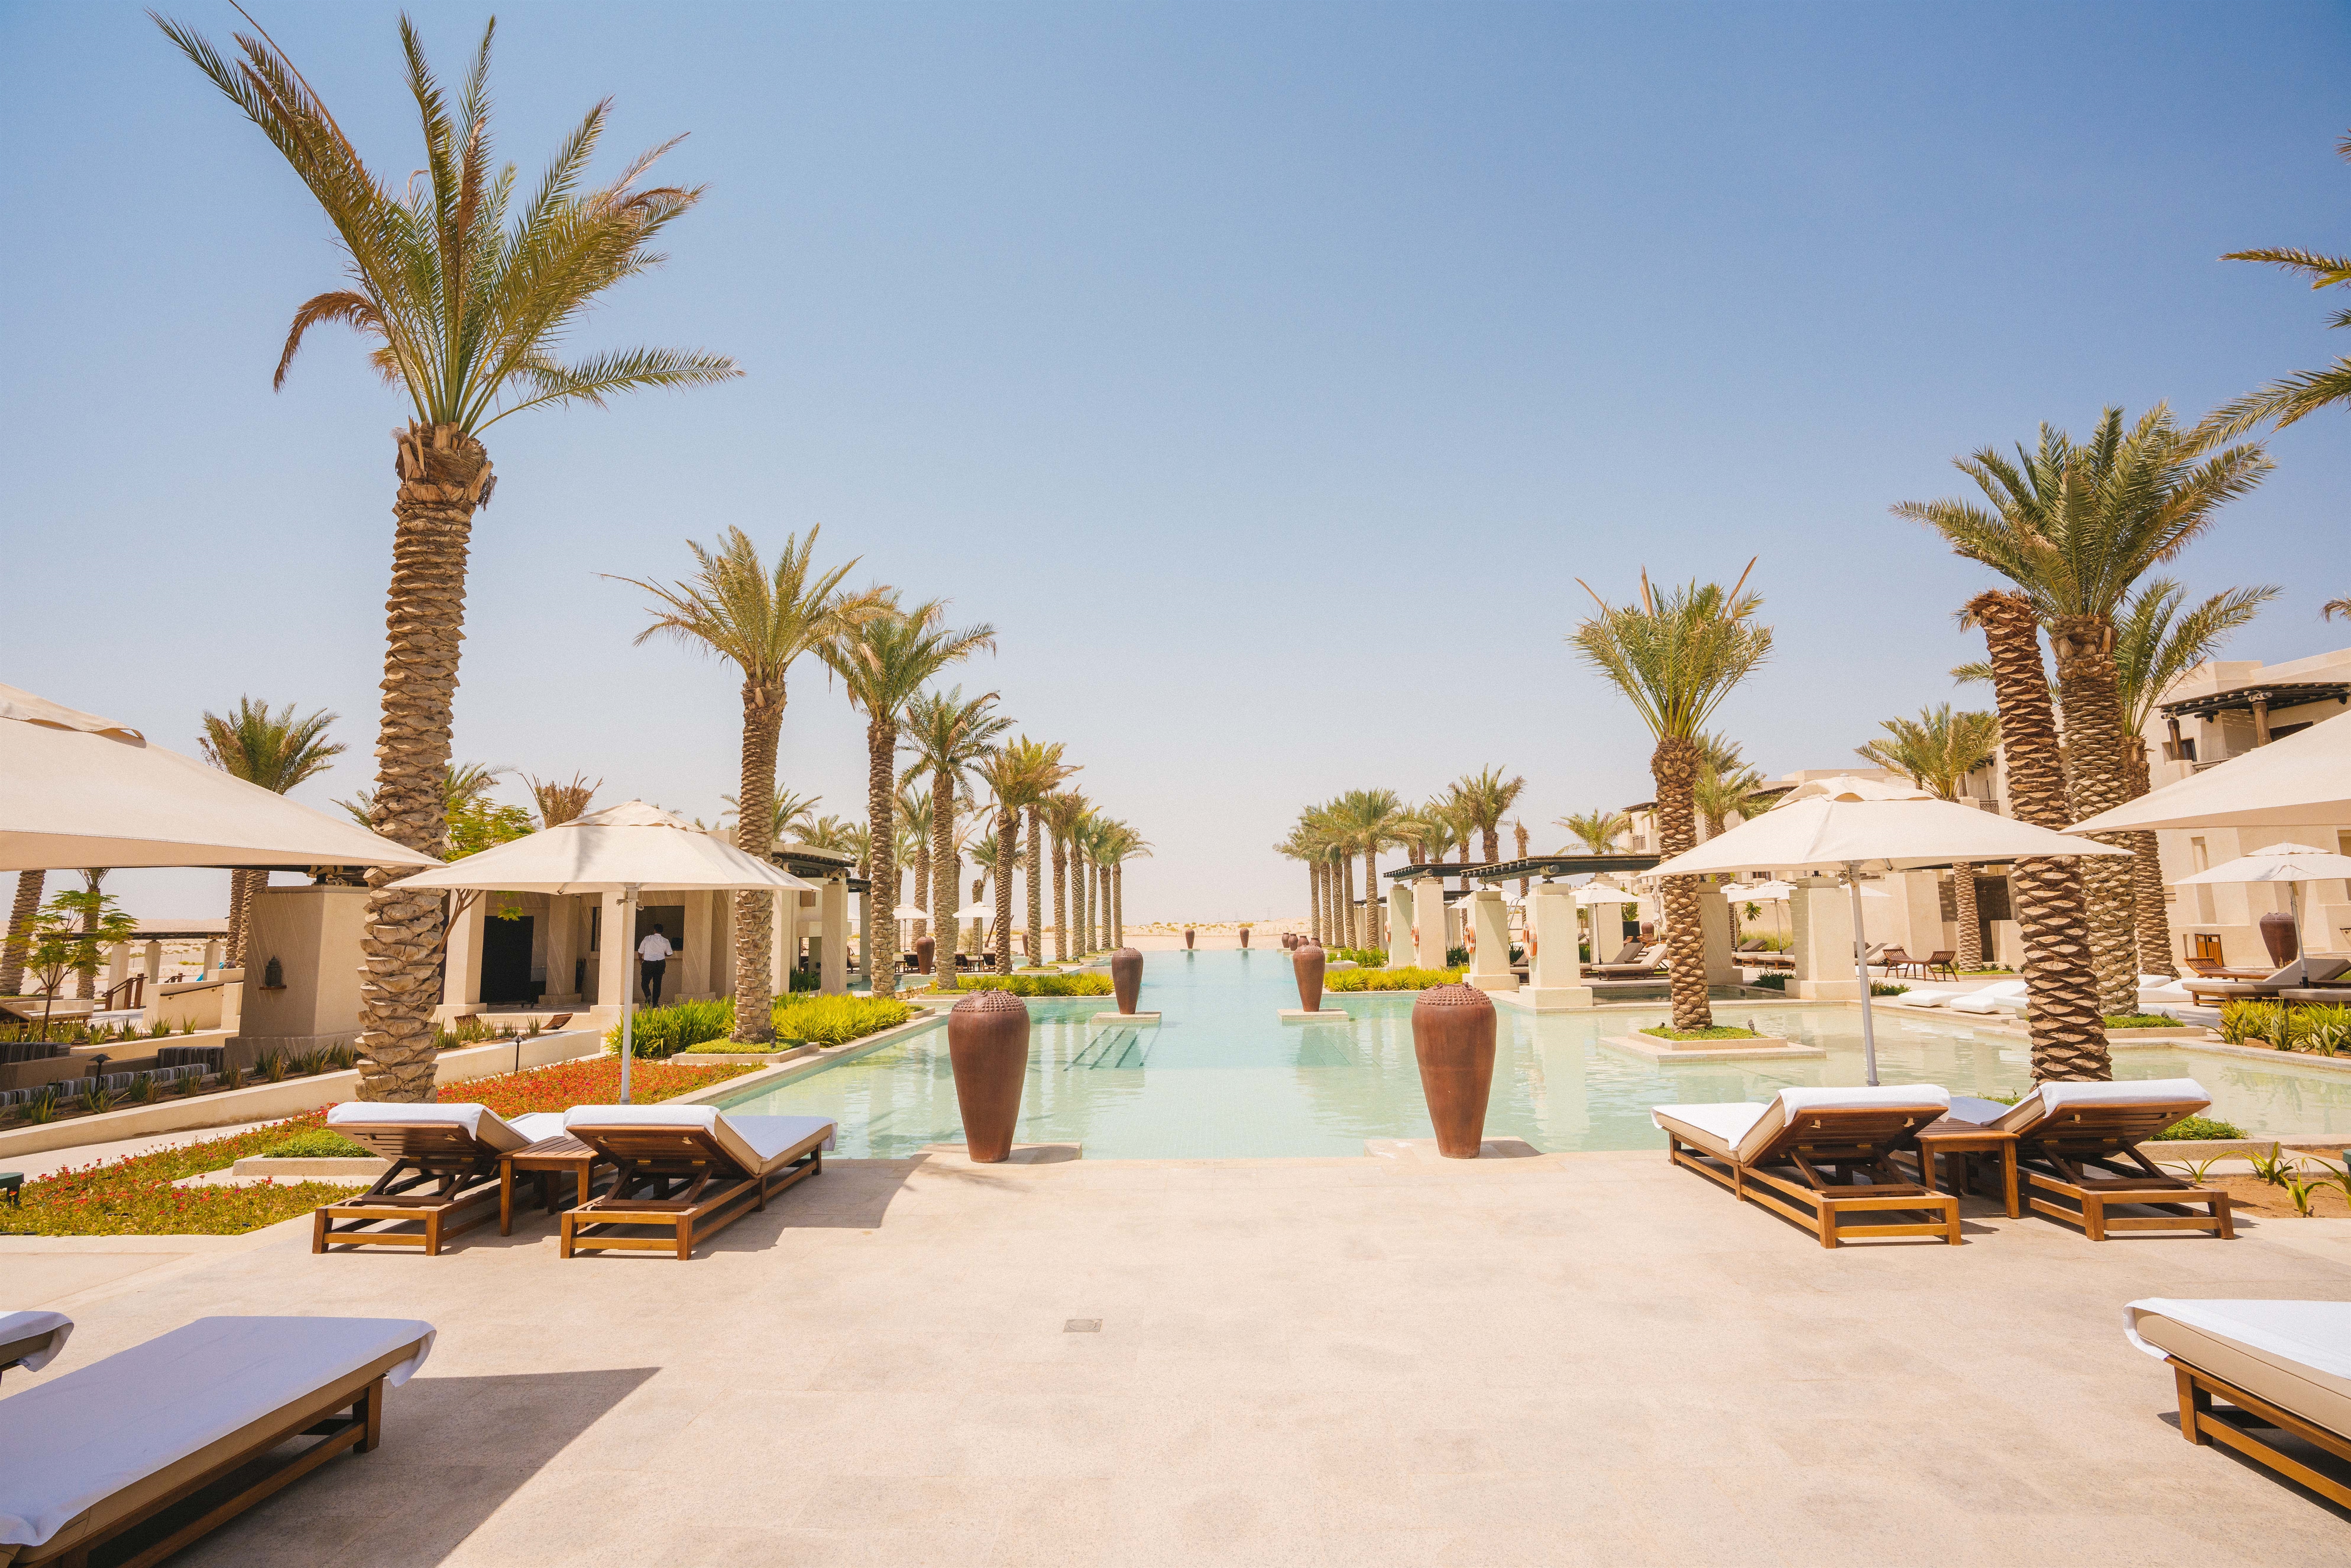 Embark on a unique wellness journey at Al Wathba Desert Resort